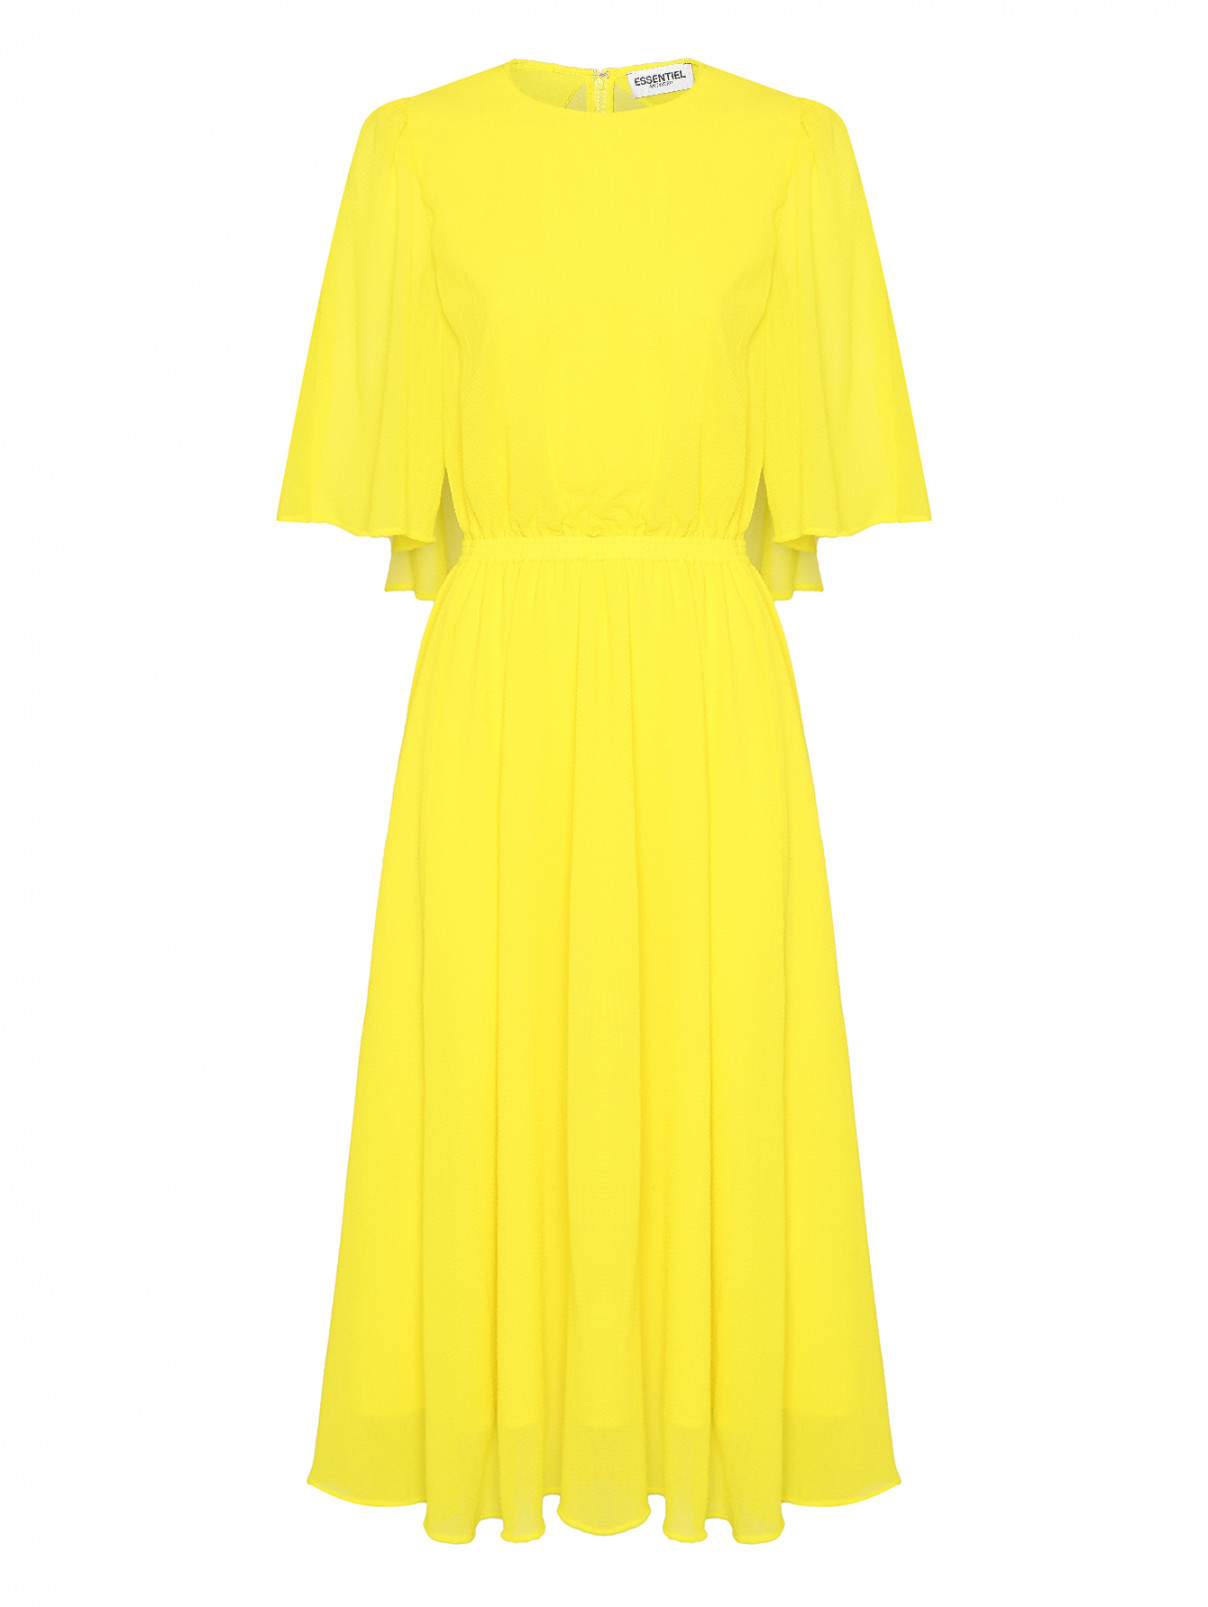 Платье-макси на резинке Essentiel Antwerp  –  Общий вид  – Цвет:  Желтый